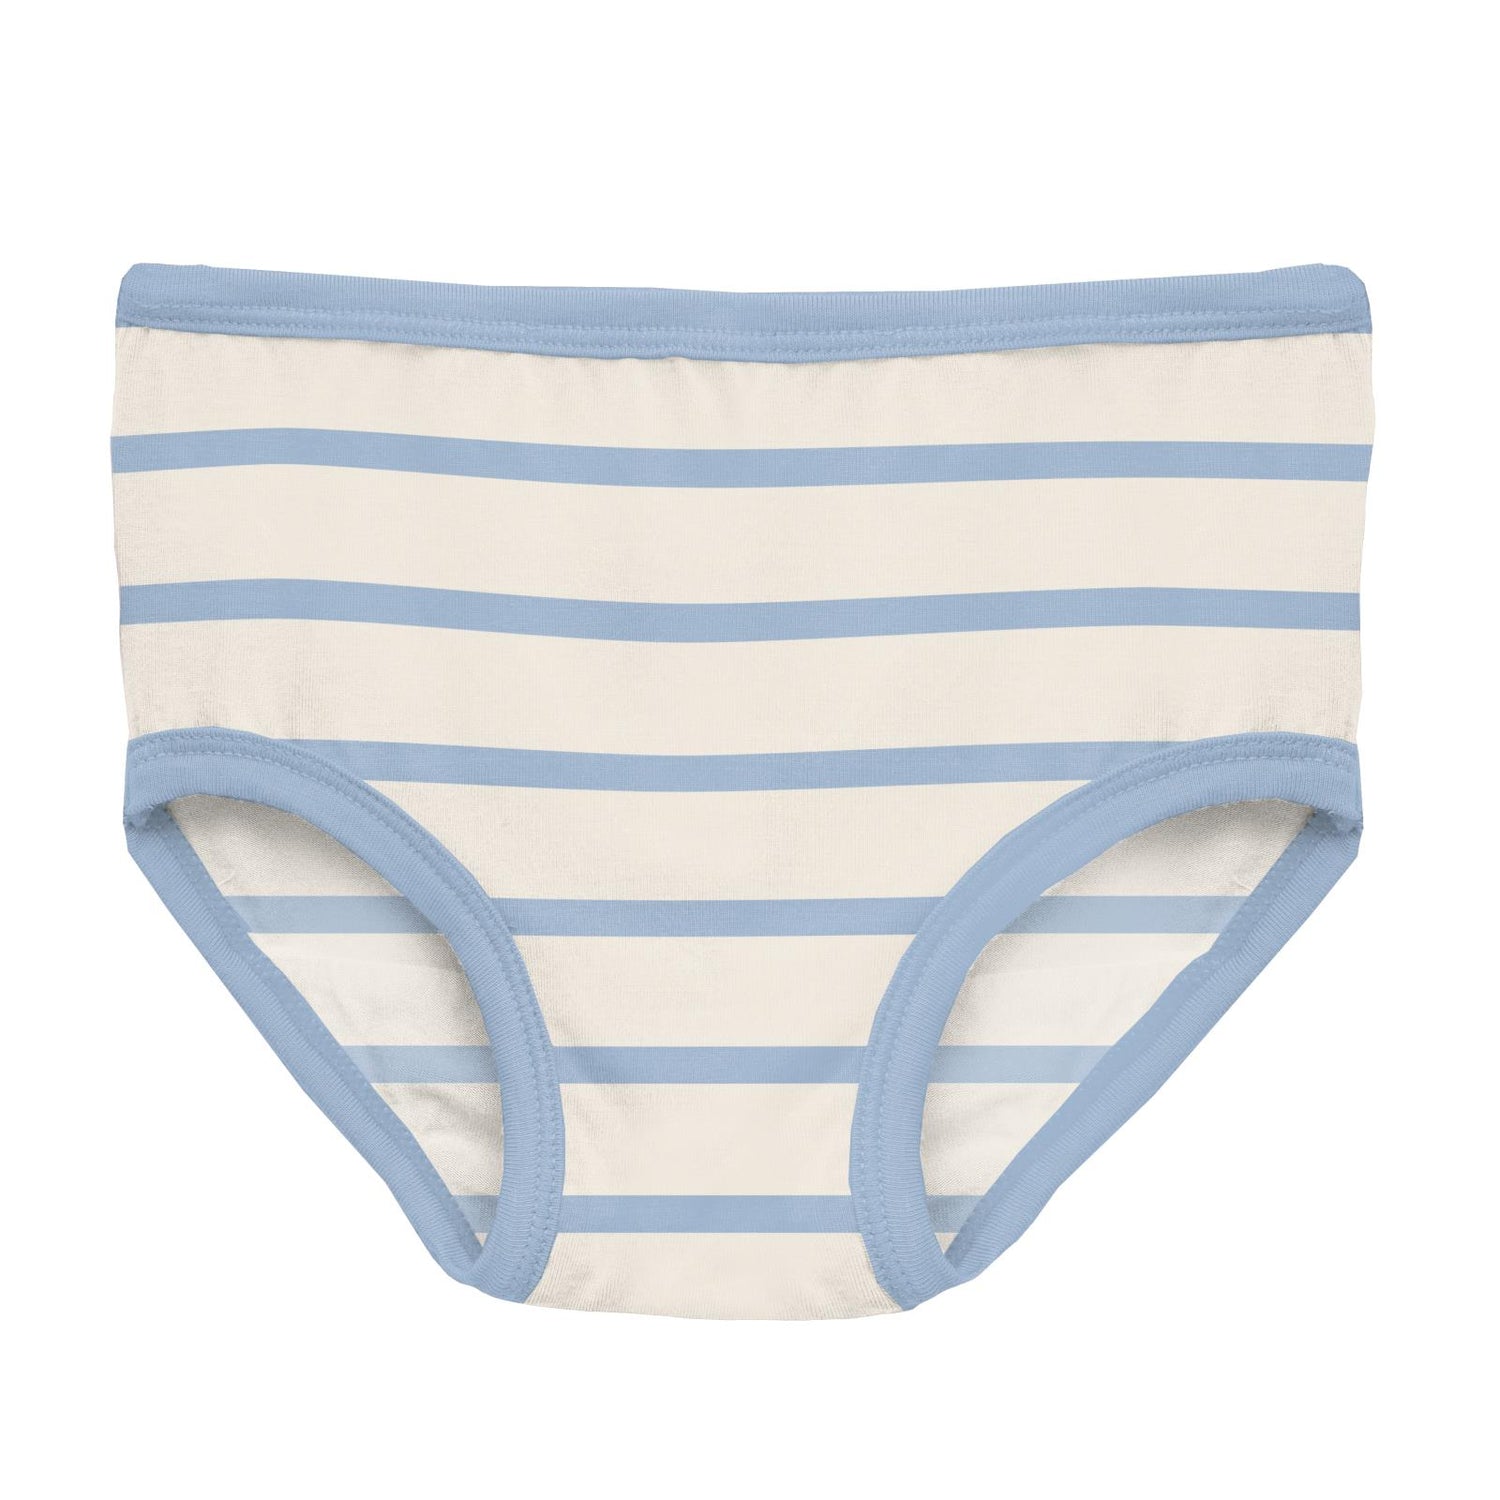 Print Girl's Underwear in Pond Sweet Stripe